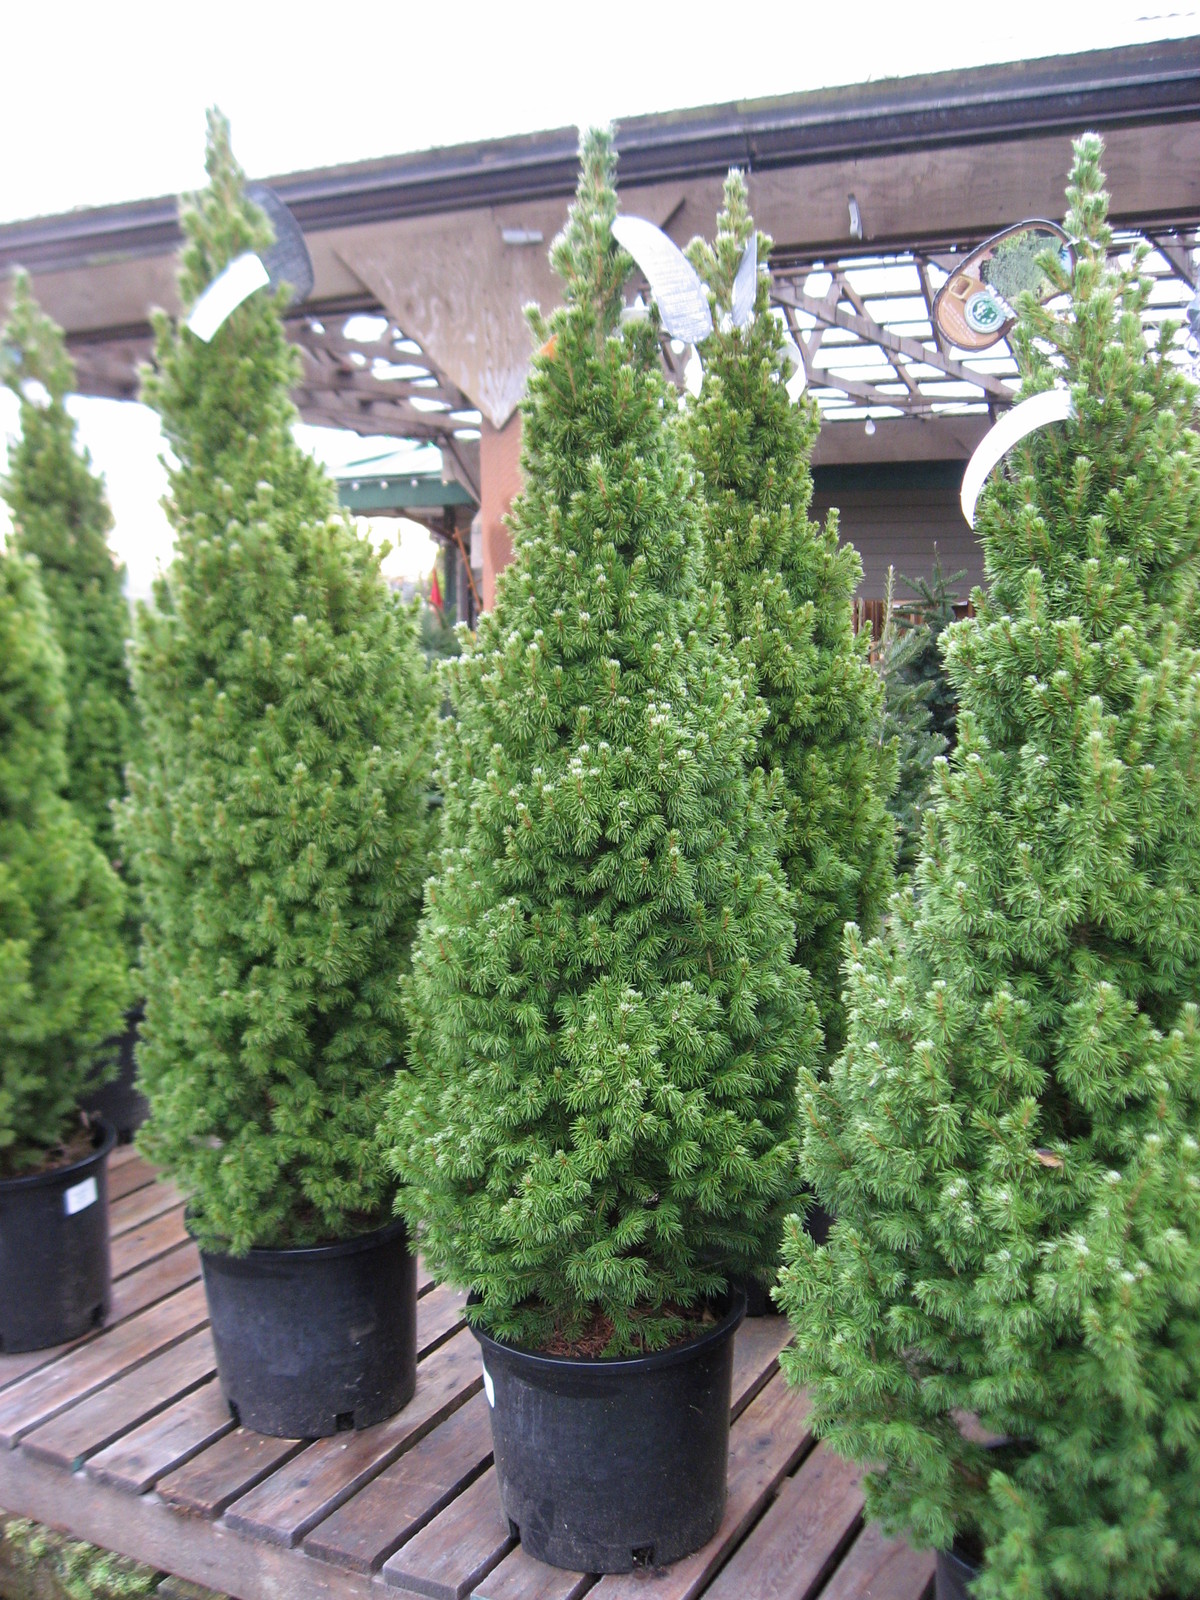 Dwarf Alberta Spruce Aka Picea Conica Live Plant Christmas Tree Fit 5 Gallon Pot - Trees